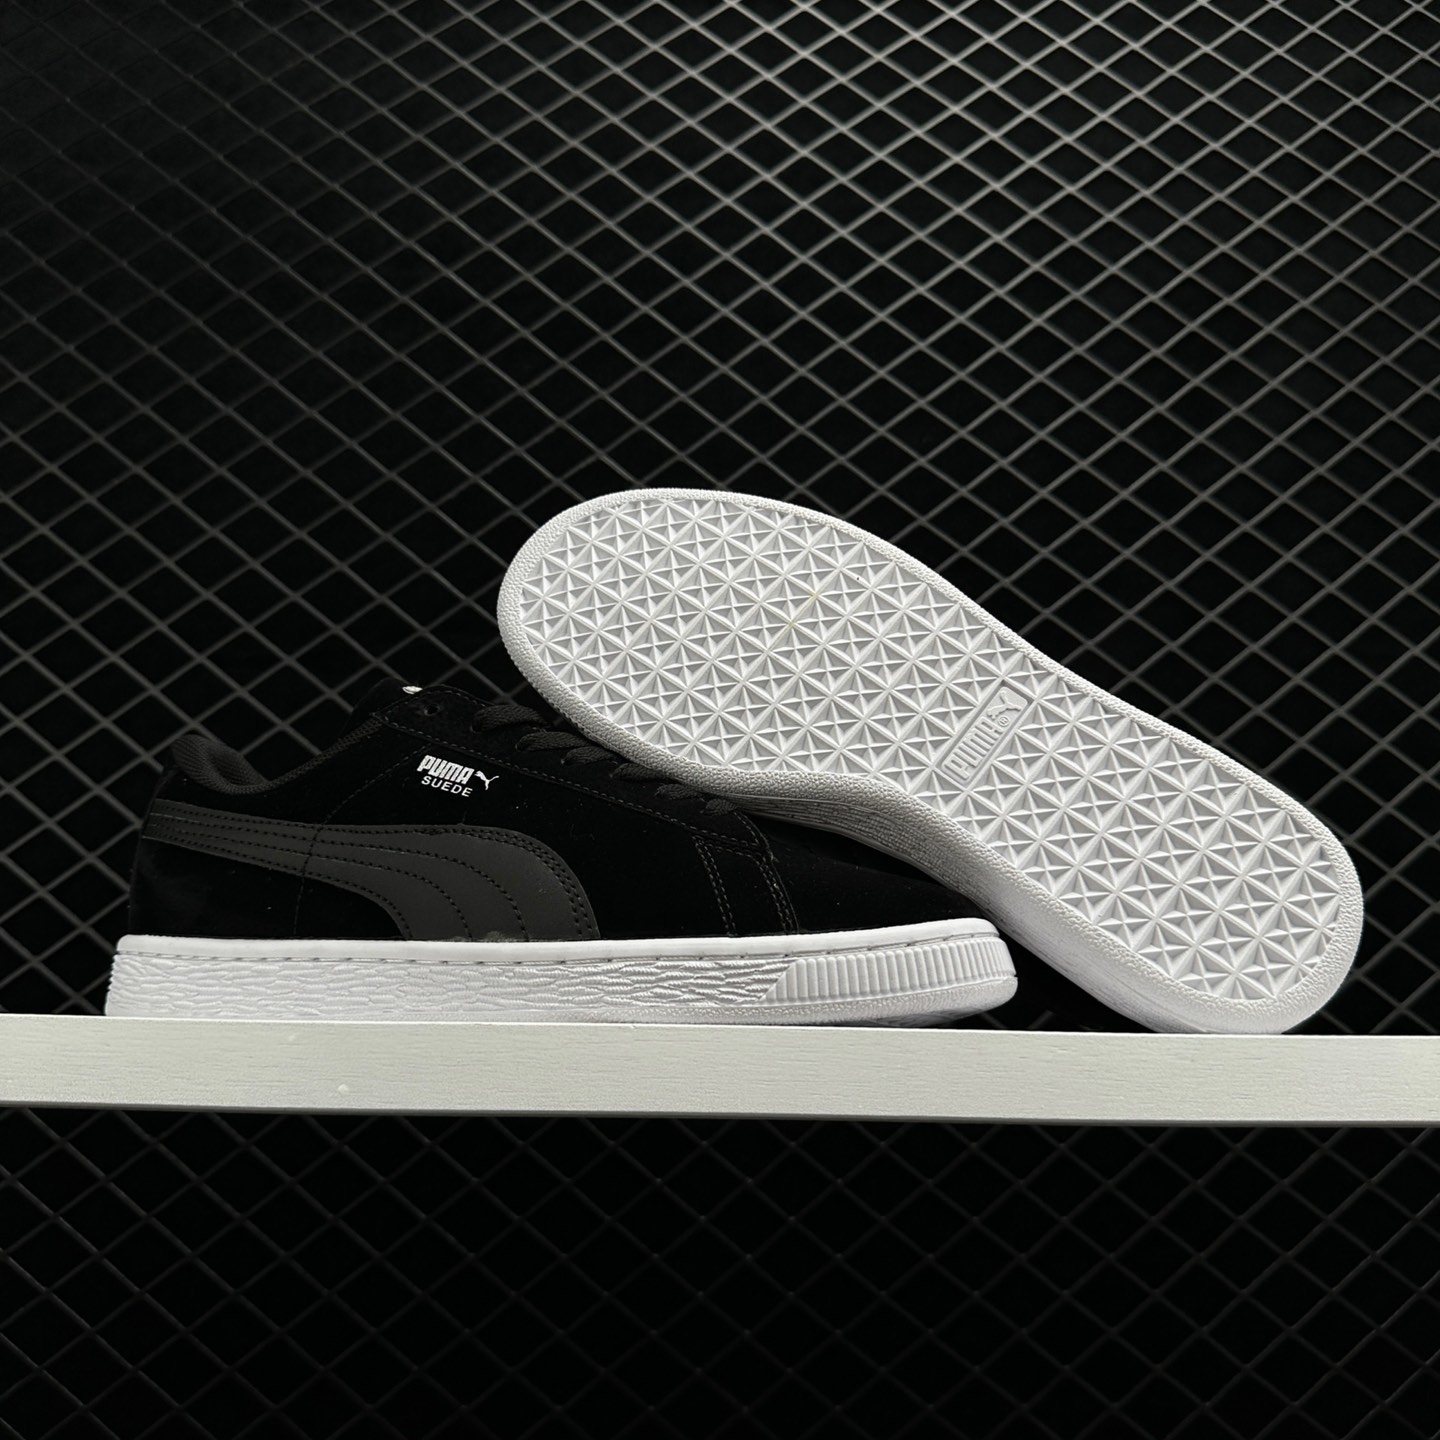 PUMA Vikky V2 Shift Black 370538-01: Stylish and Comfortable Sneakers